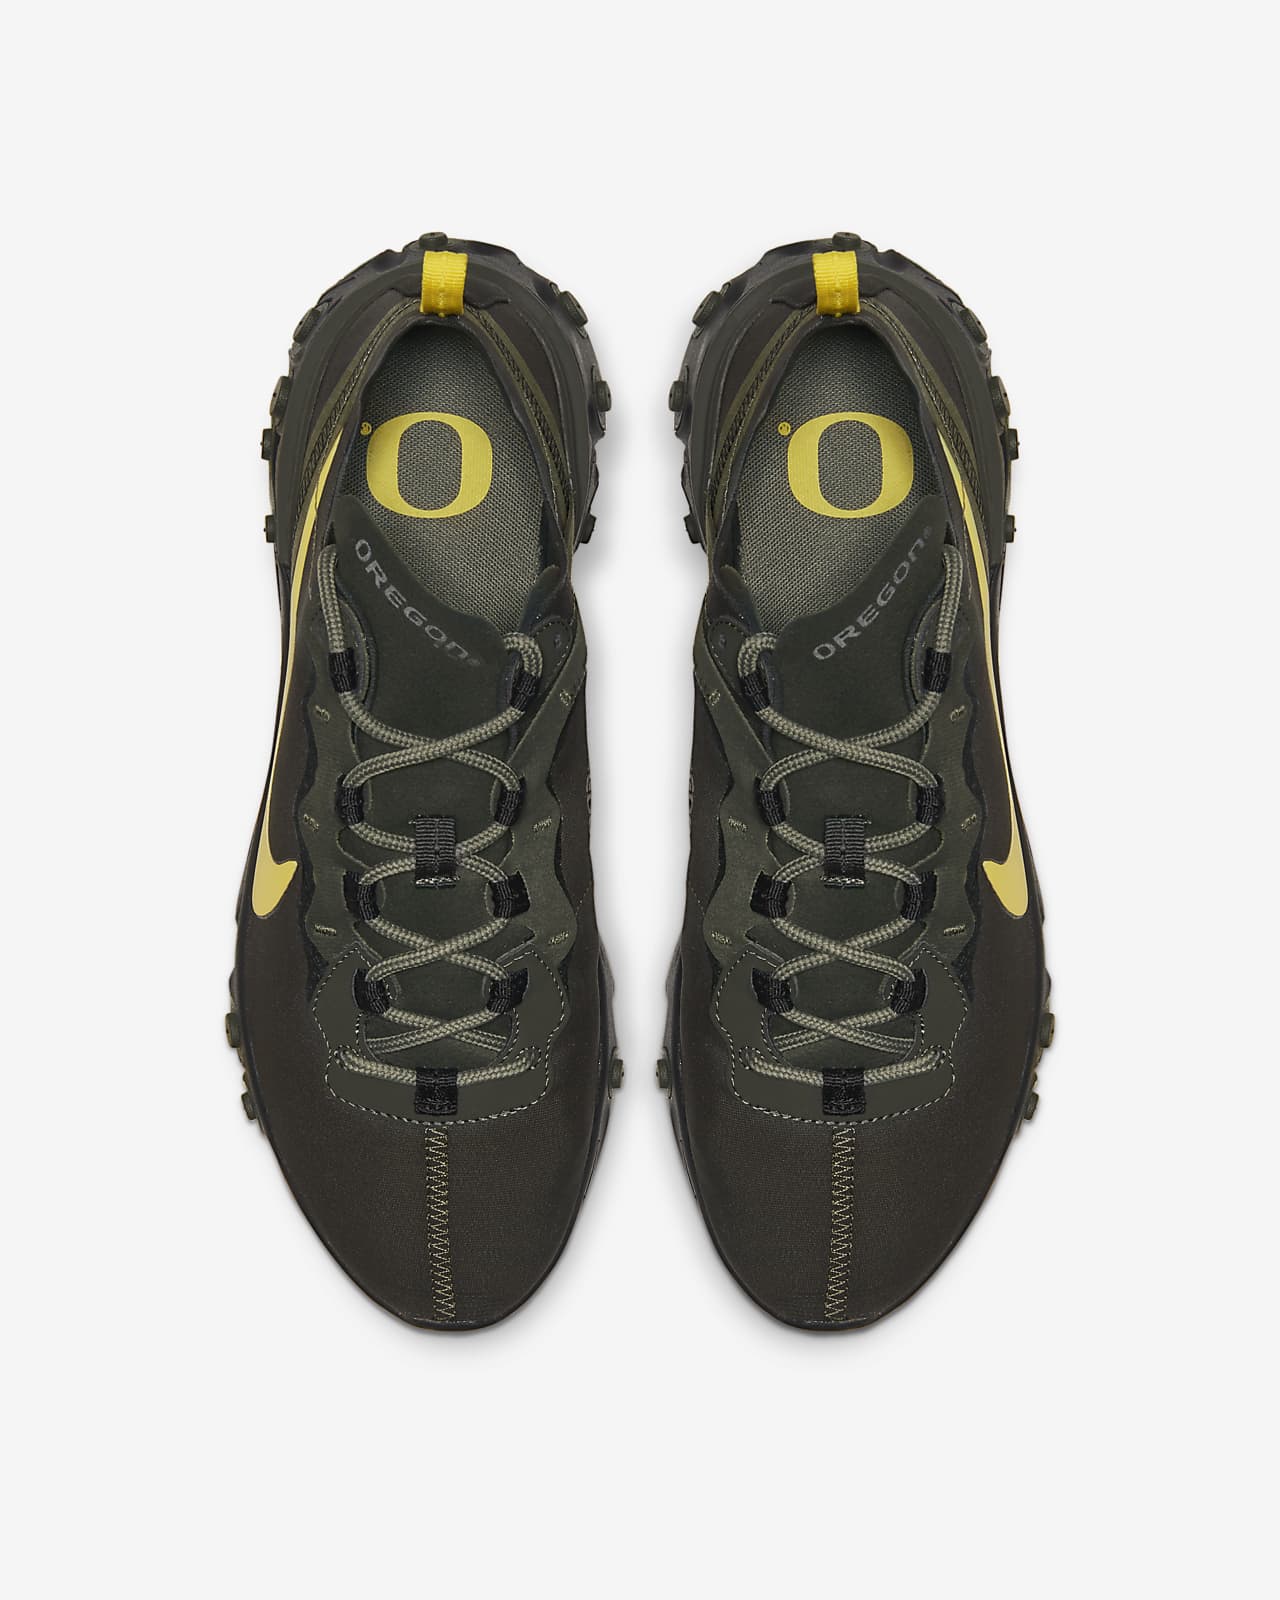 Nike React Element 55 (Oregon) Men's 